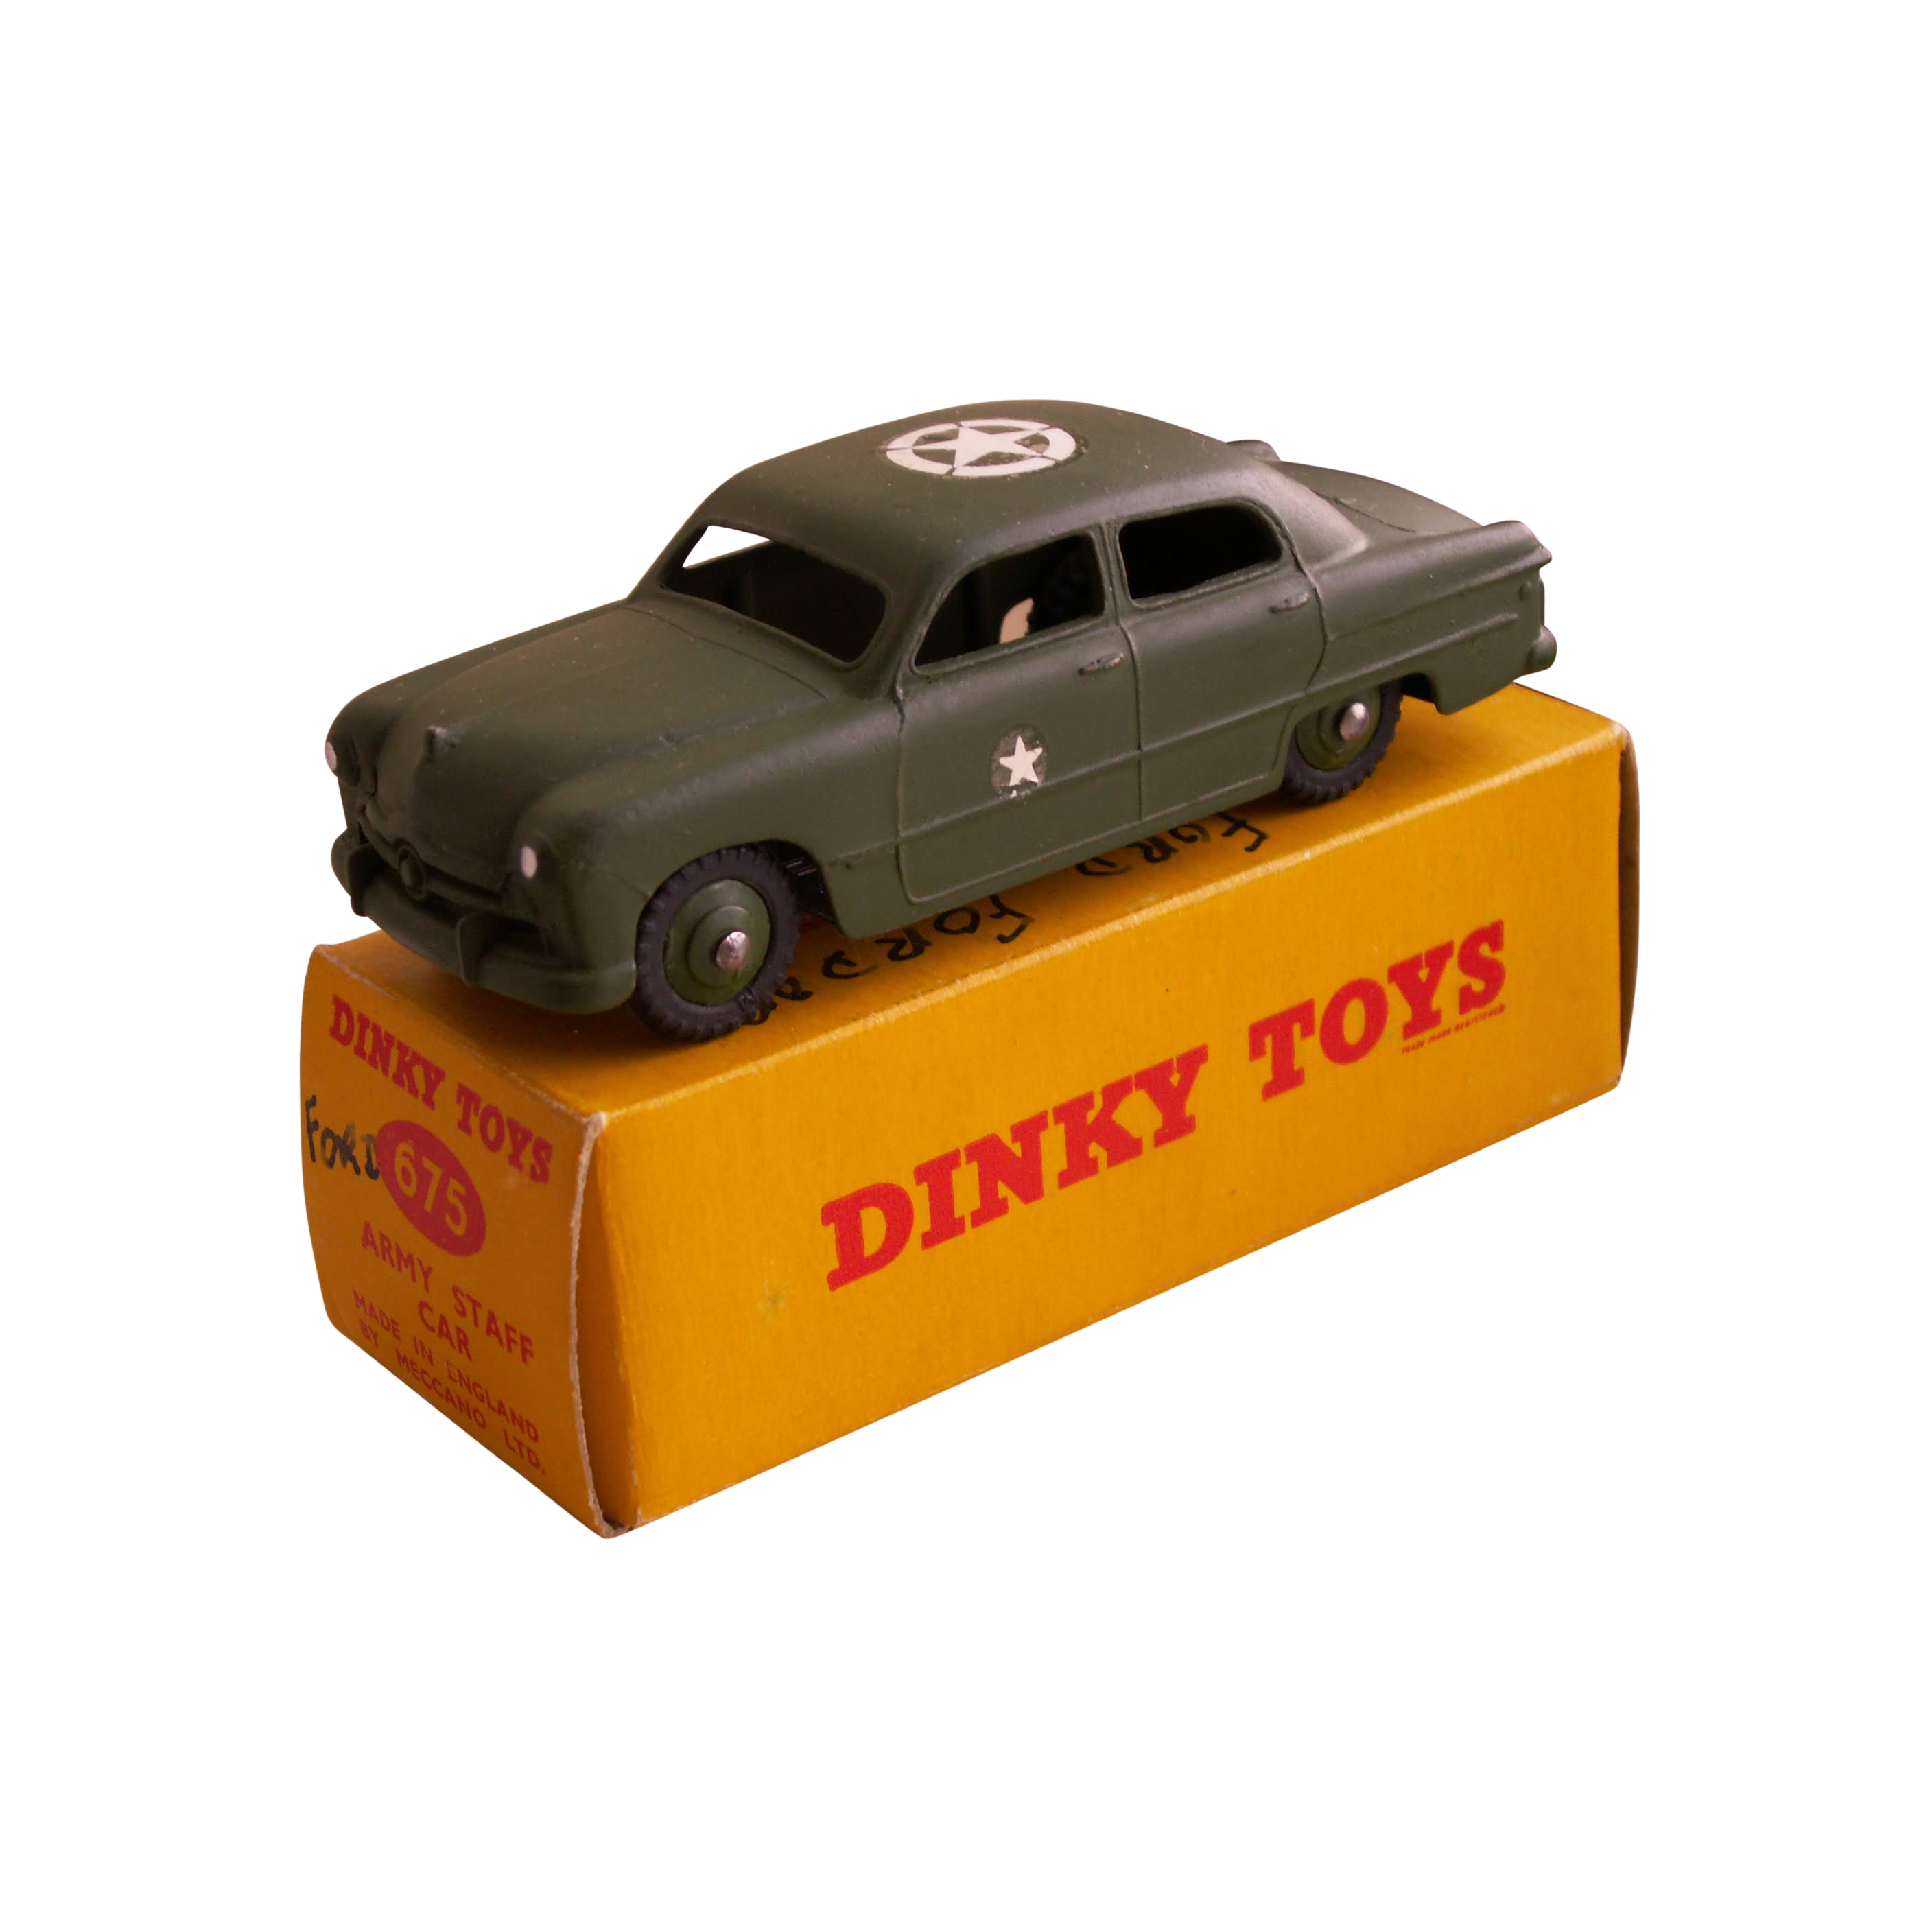 4 Vintage Dinky Military Toys W/ Boxes